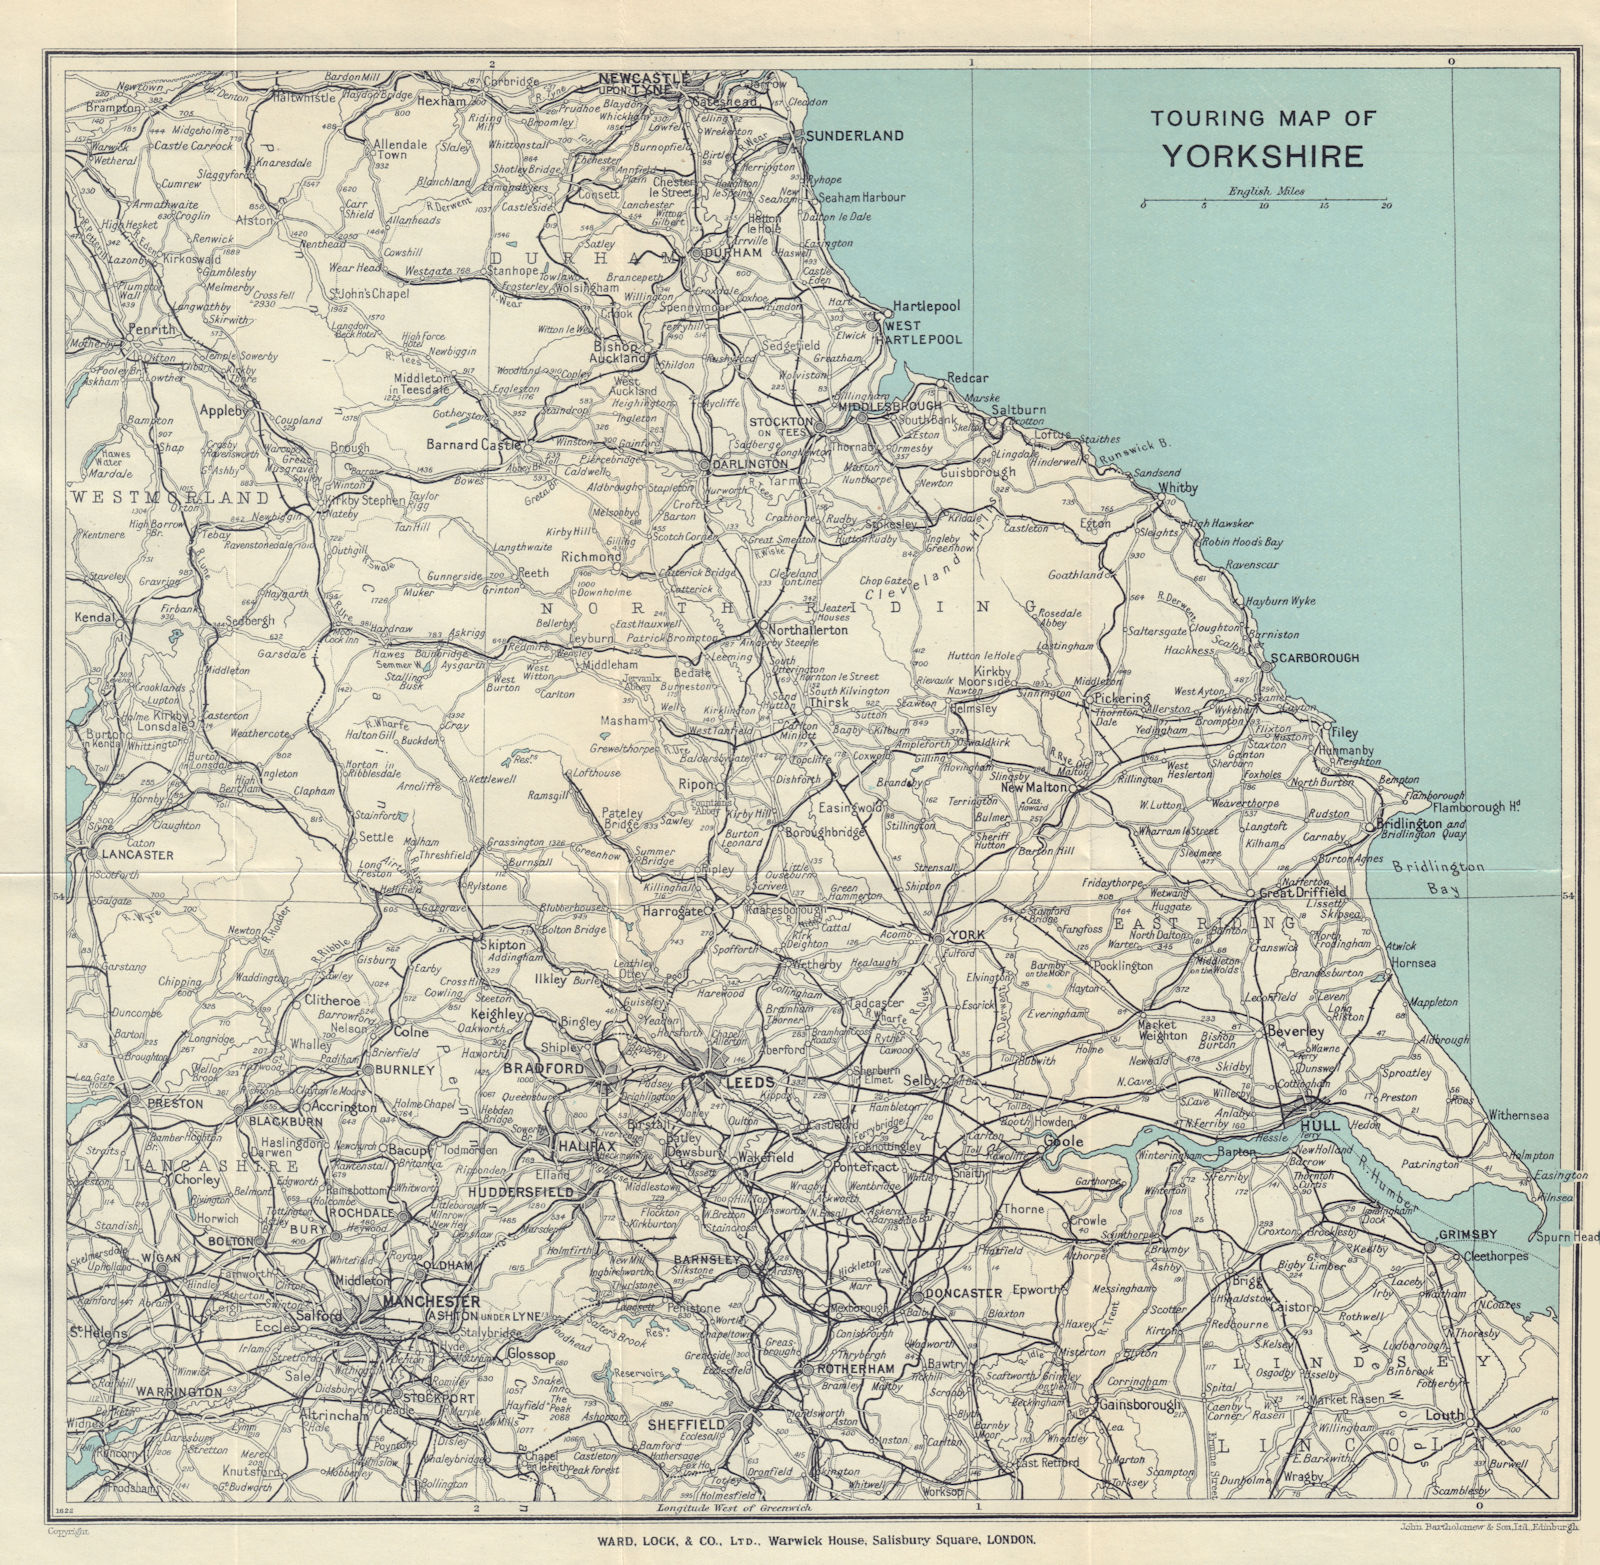 TOURING MAP OF YORKSHIRE & Northern England. Pre-motorways. WARD LOCK 1931